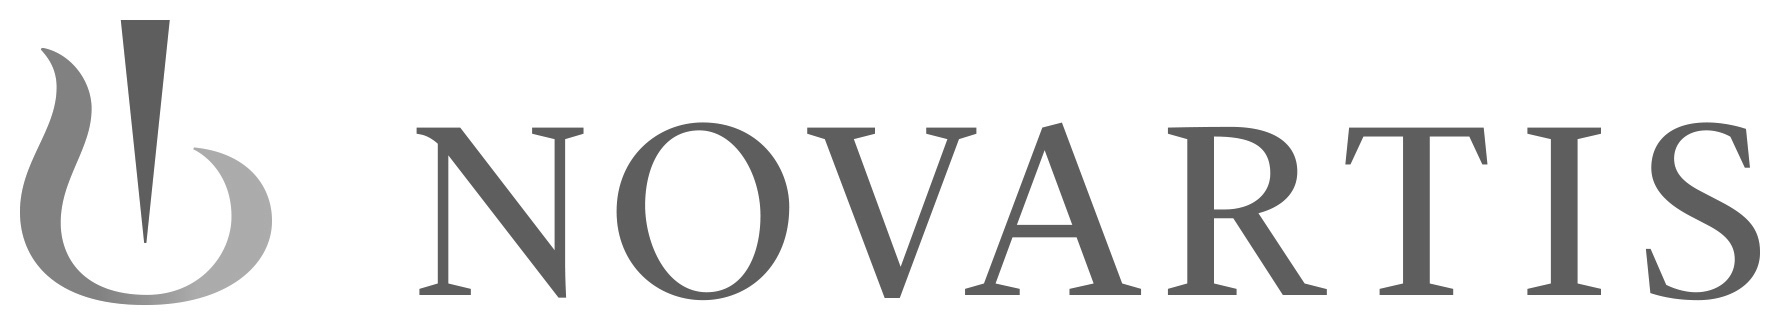 Novartis logo pos rgb Kopienewsletter